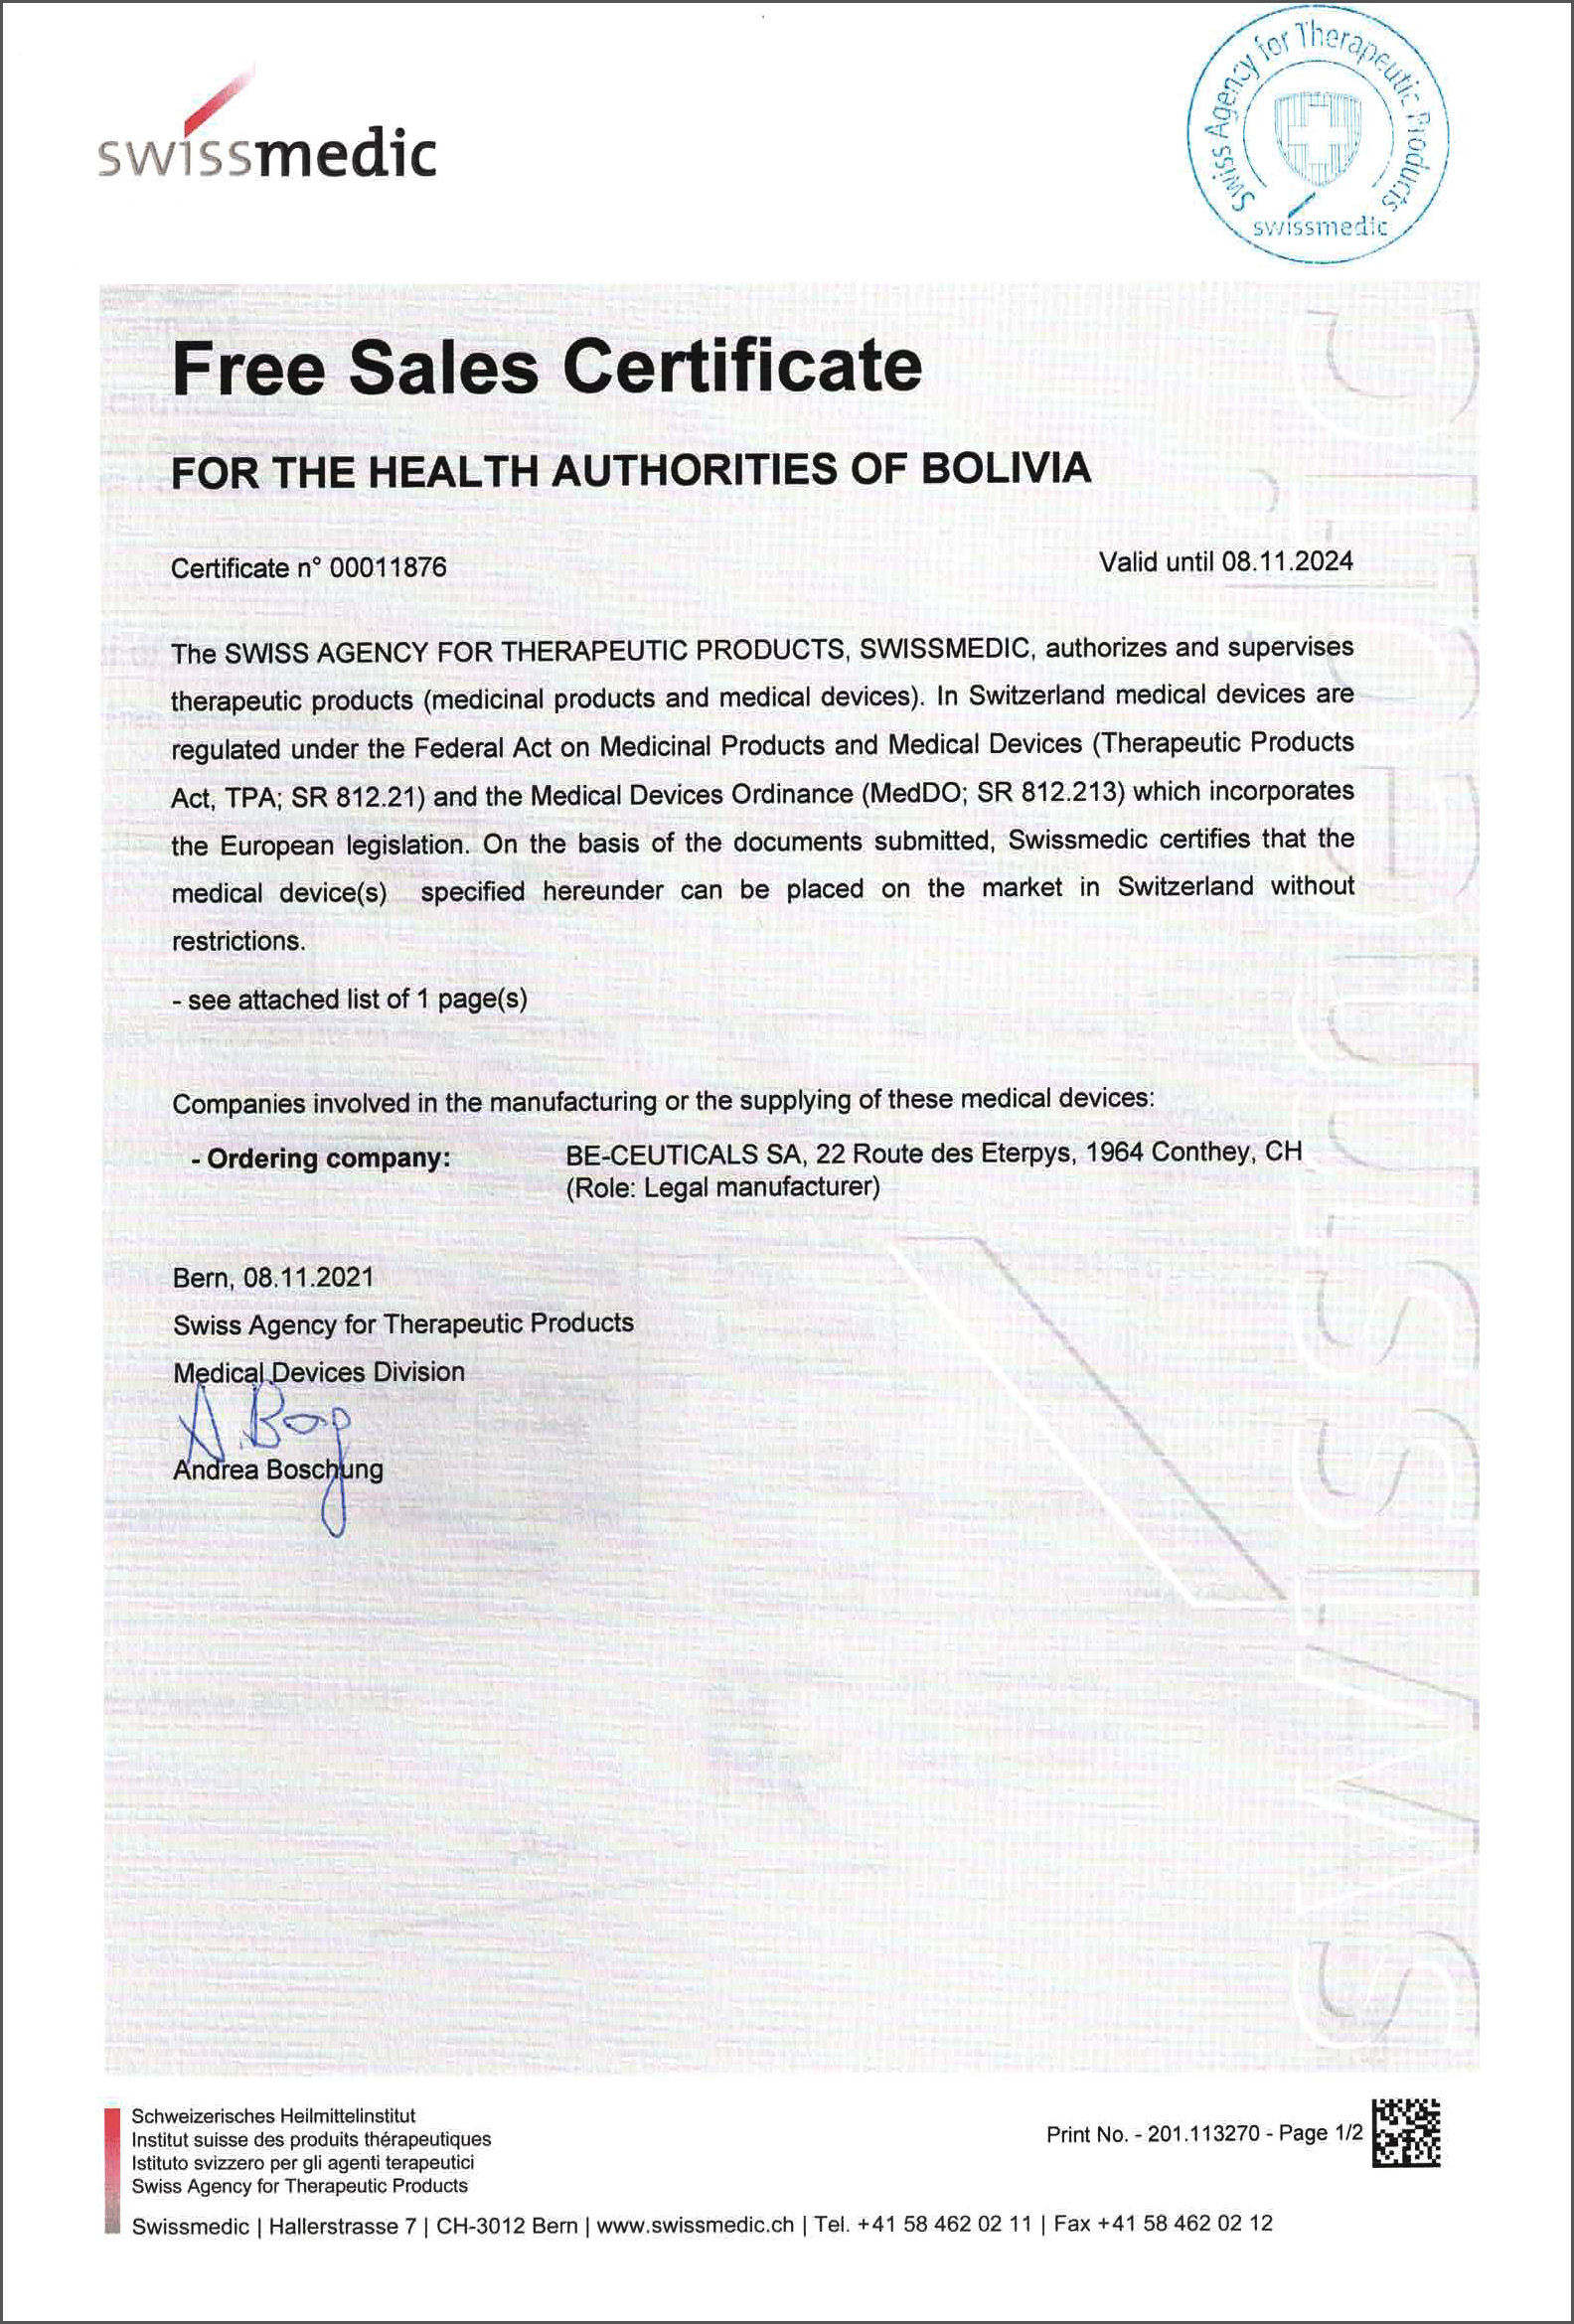 Swissmedic - Free Sales Certificate - Bolivia